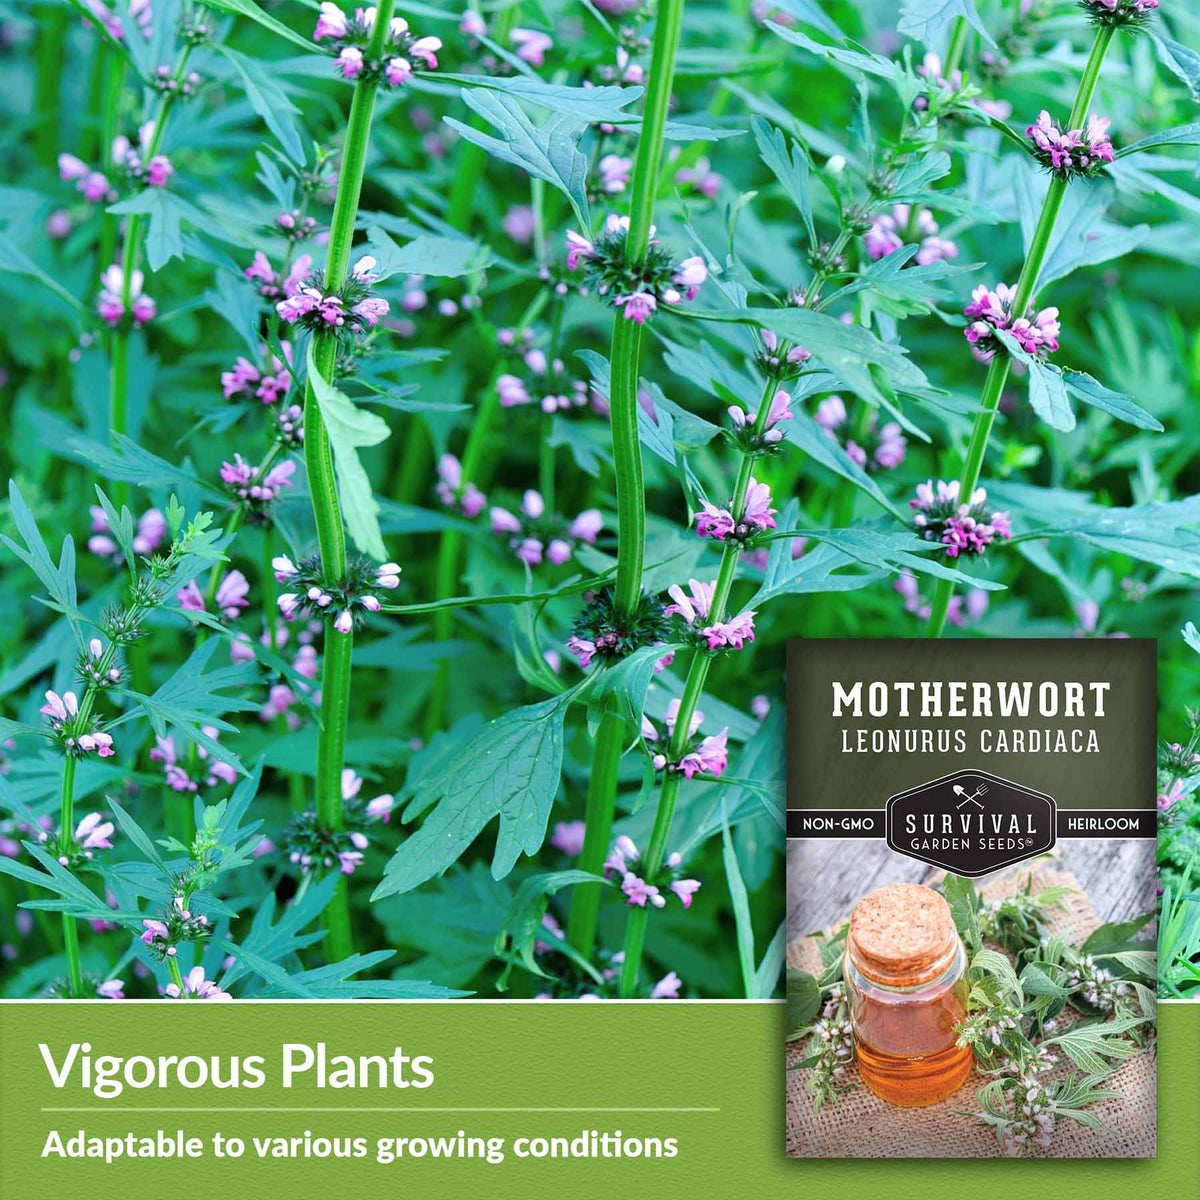 Vigorous plants